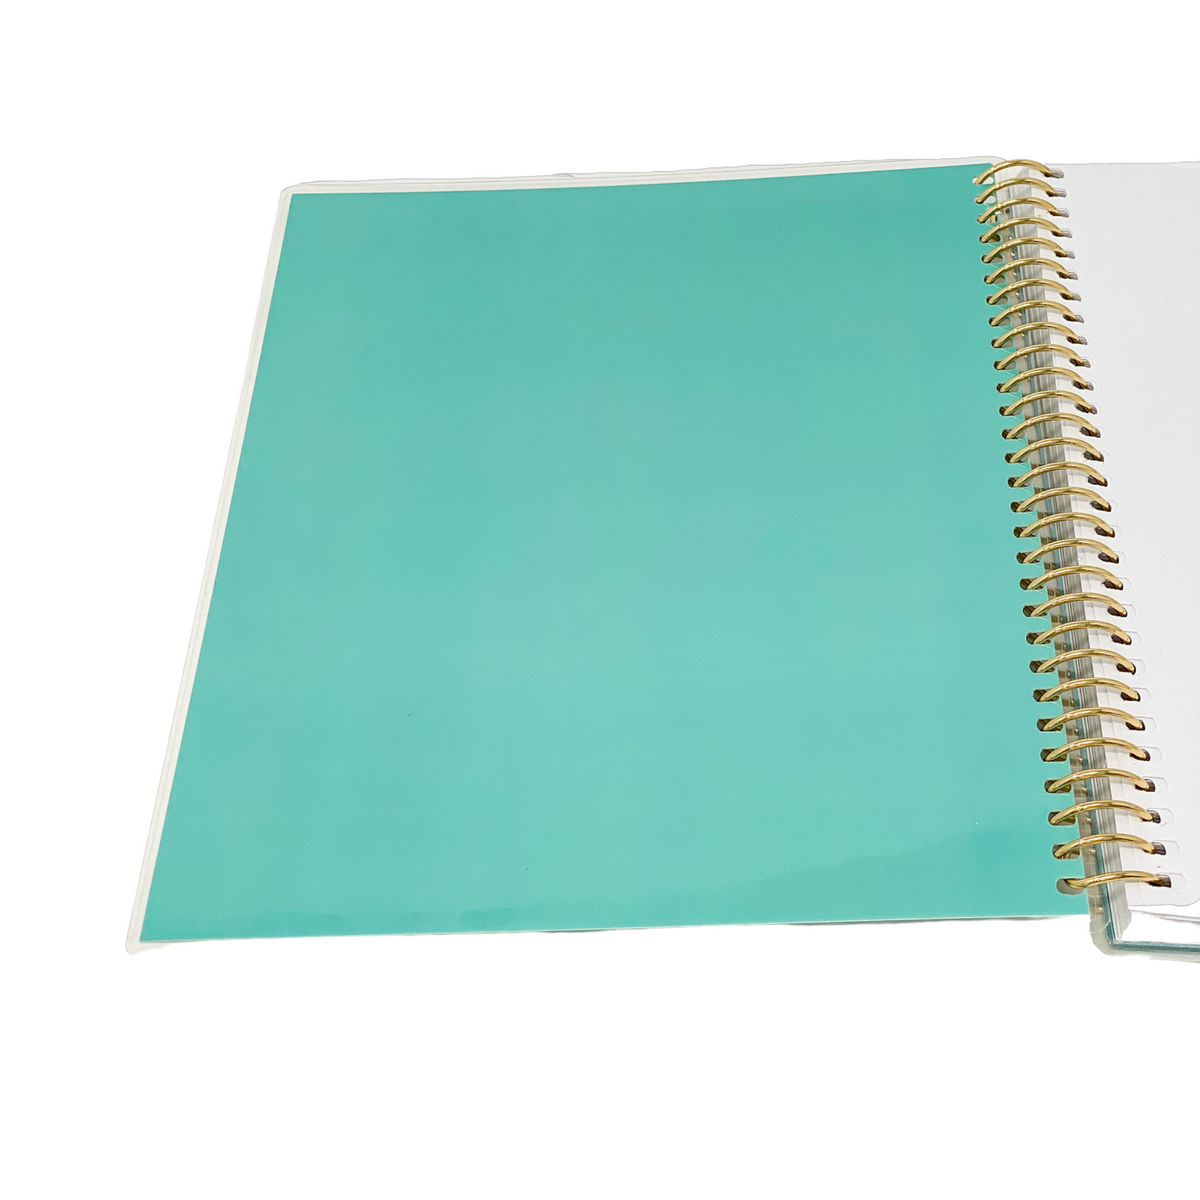 Notebook - Blue Polka Dot